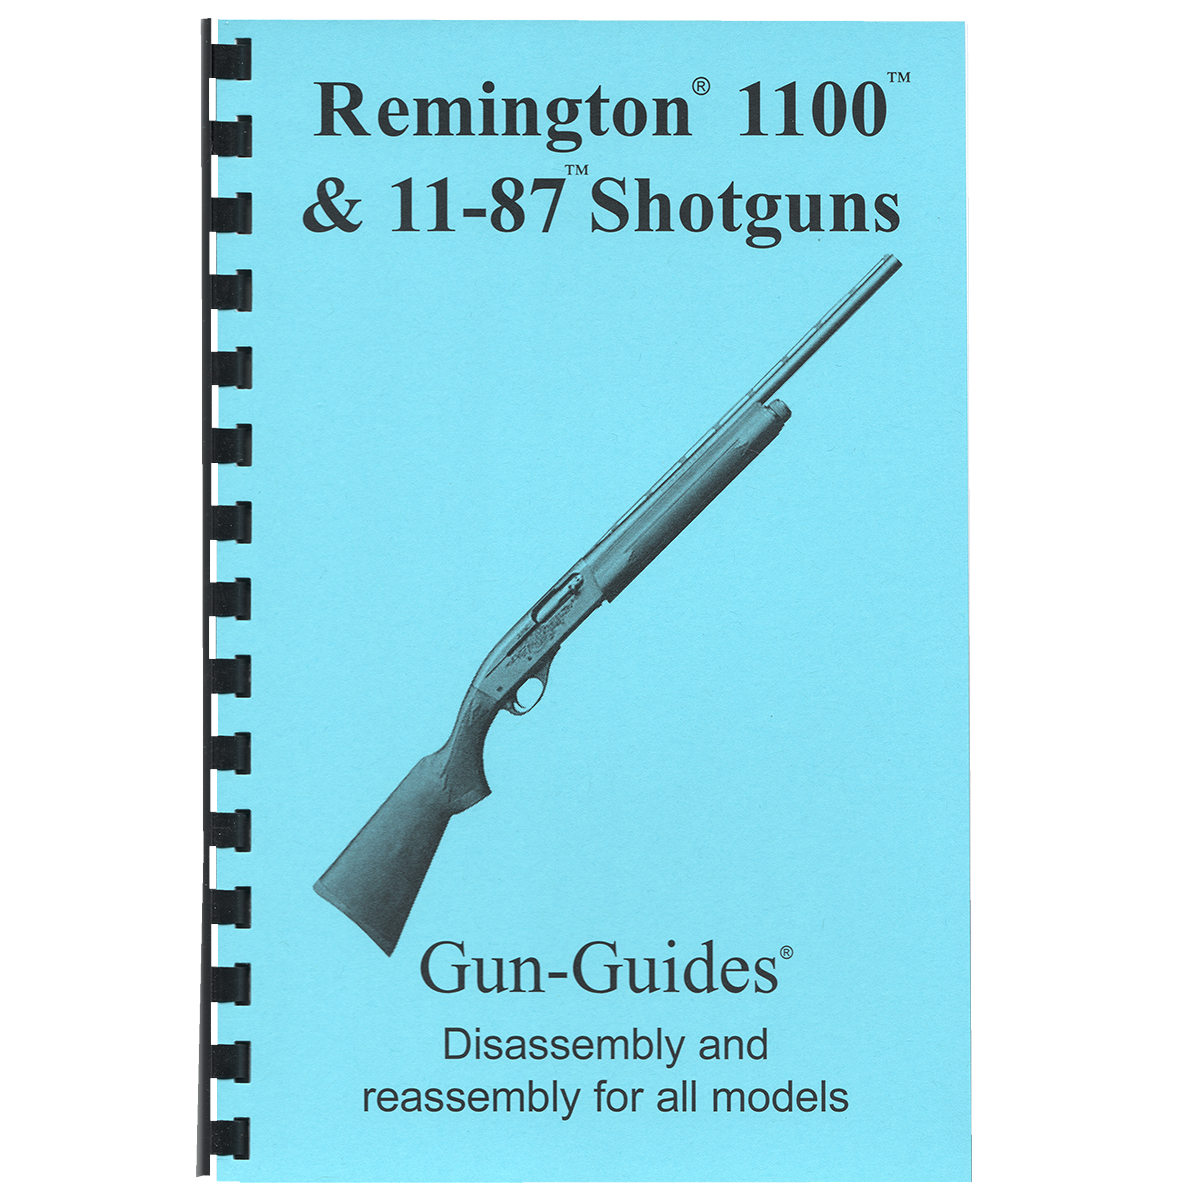 Remington 1100 & 11-87 Shotguns Gun-Guides®